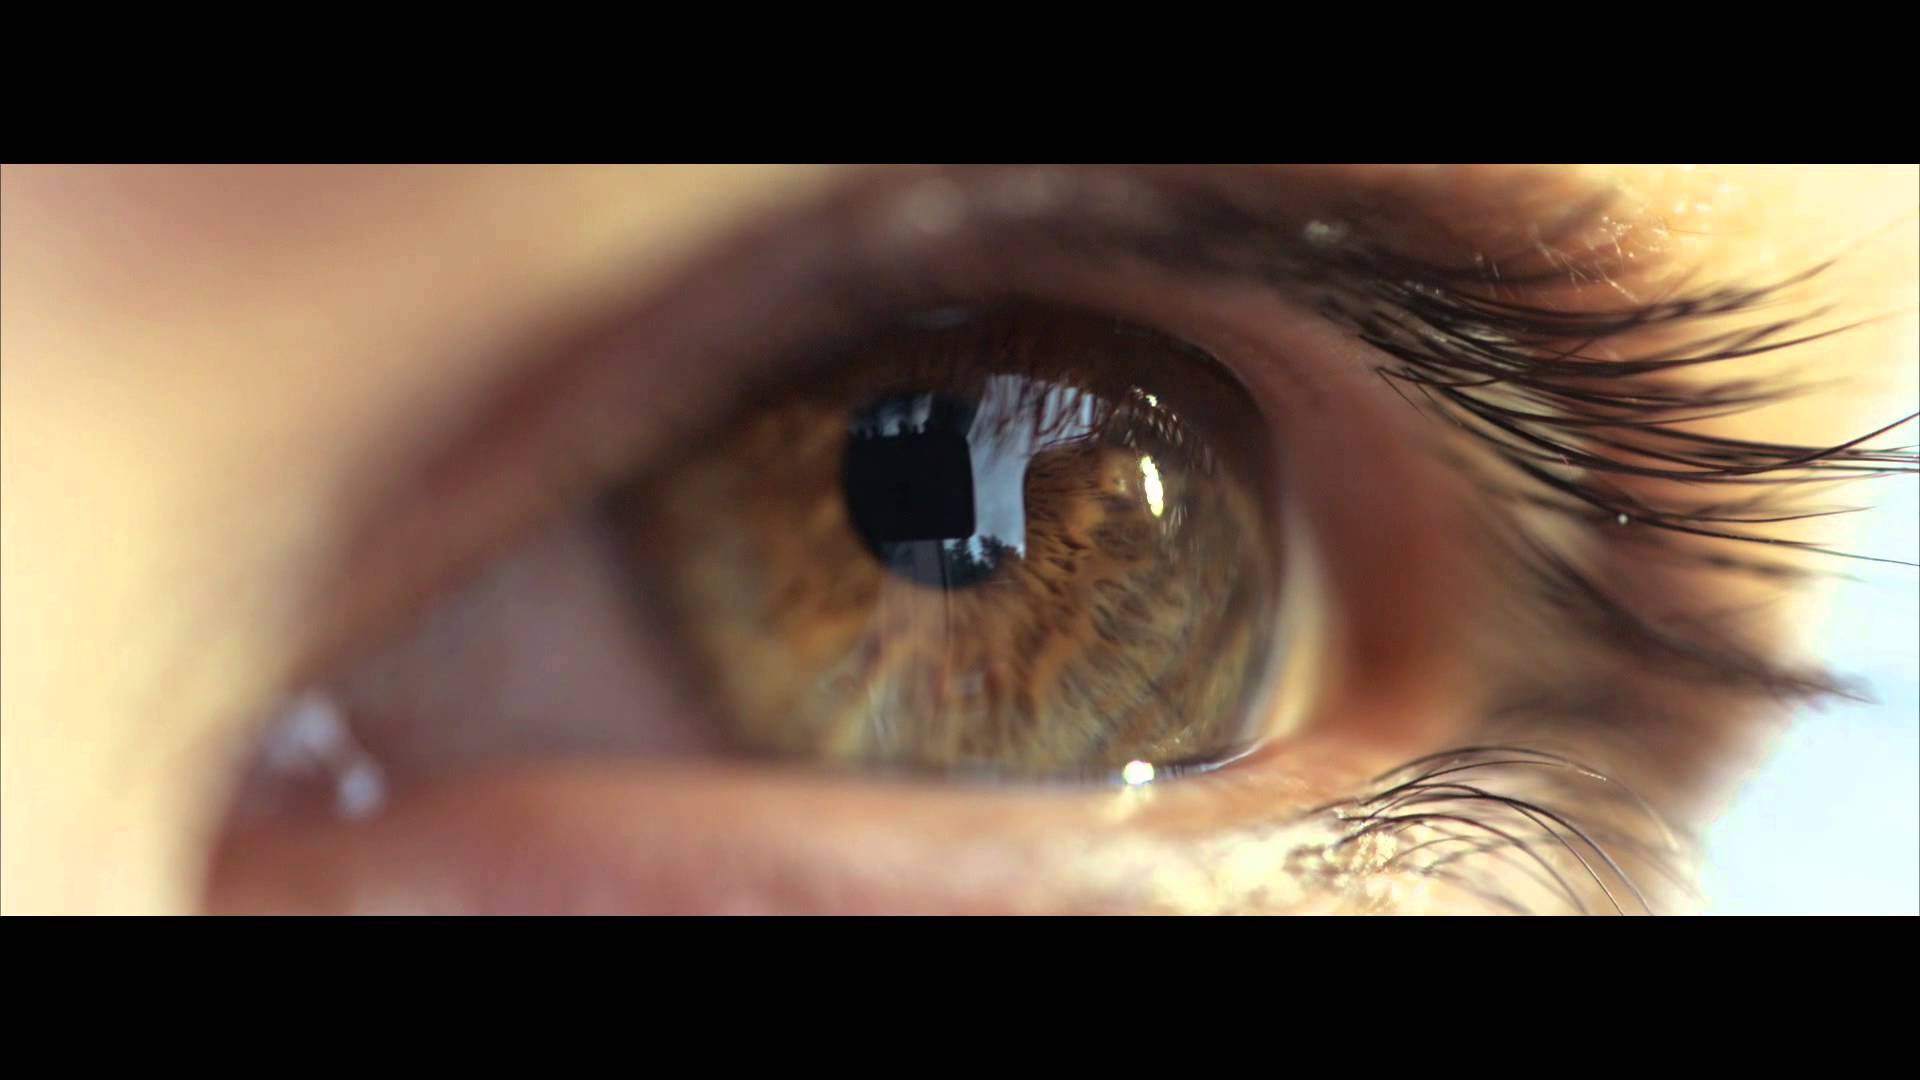 The Human Eye Closeup - Macro slow-motion - YouTube